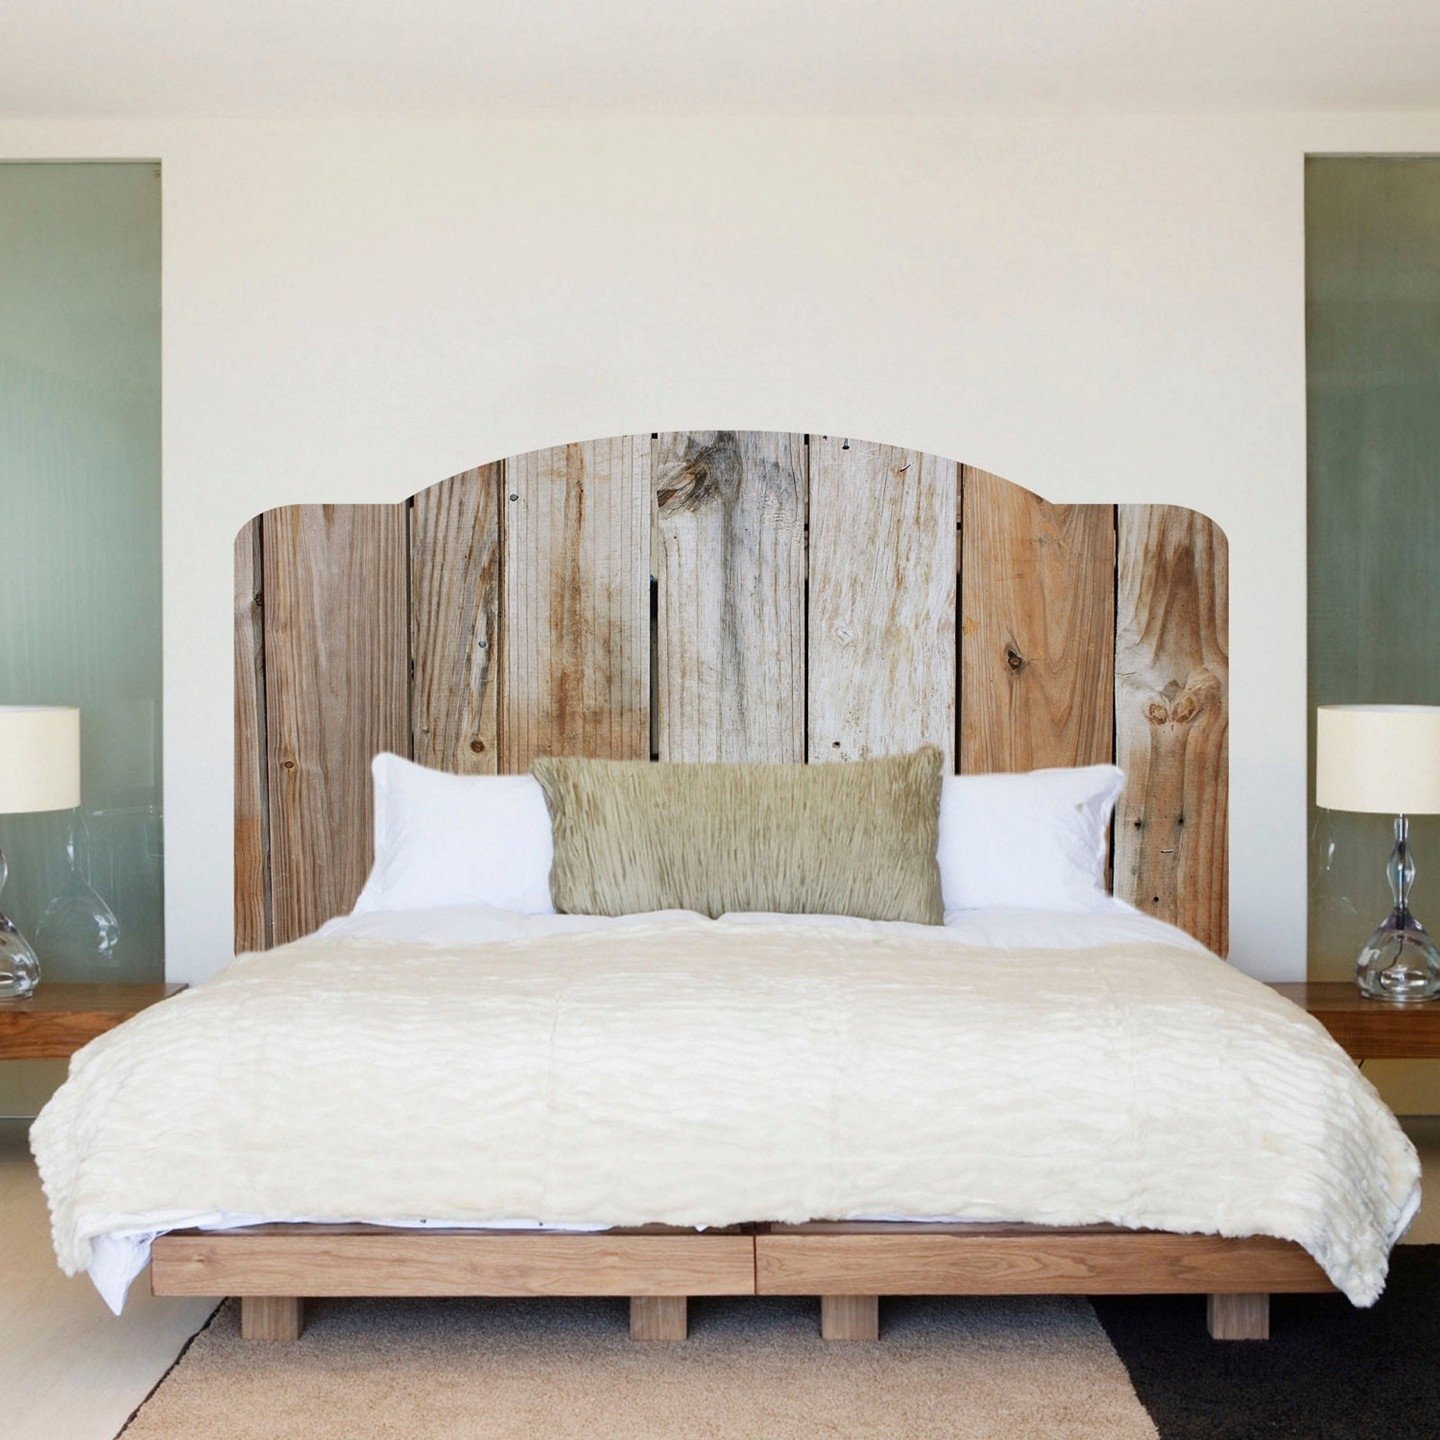 10 Lovable Make Your Own Headboard Ideas cool diy headboard ideas for full beds homestylediary 2022